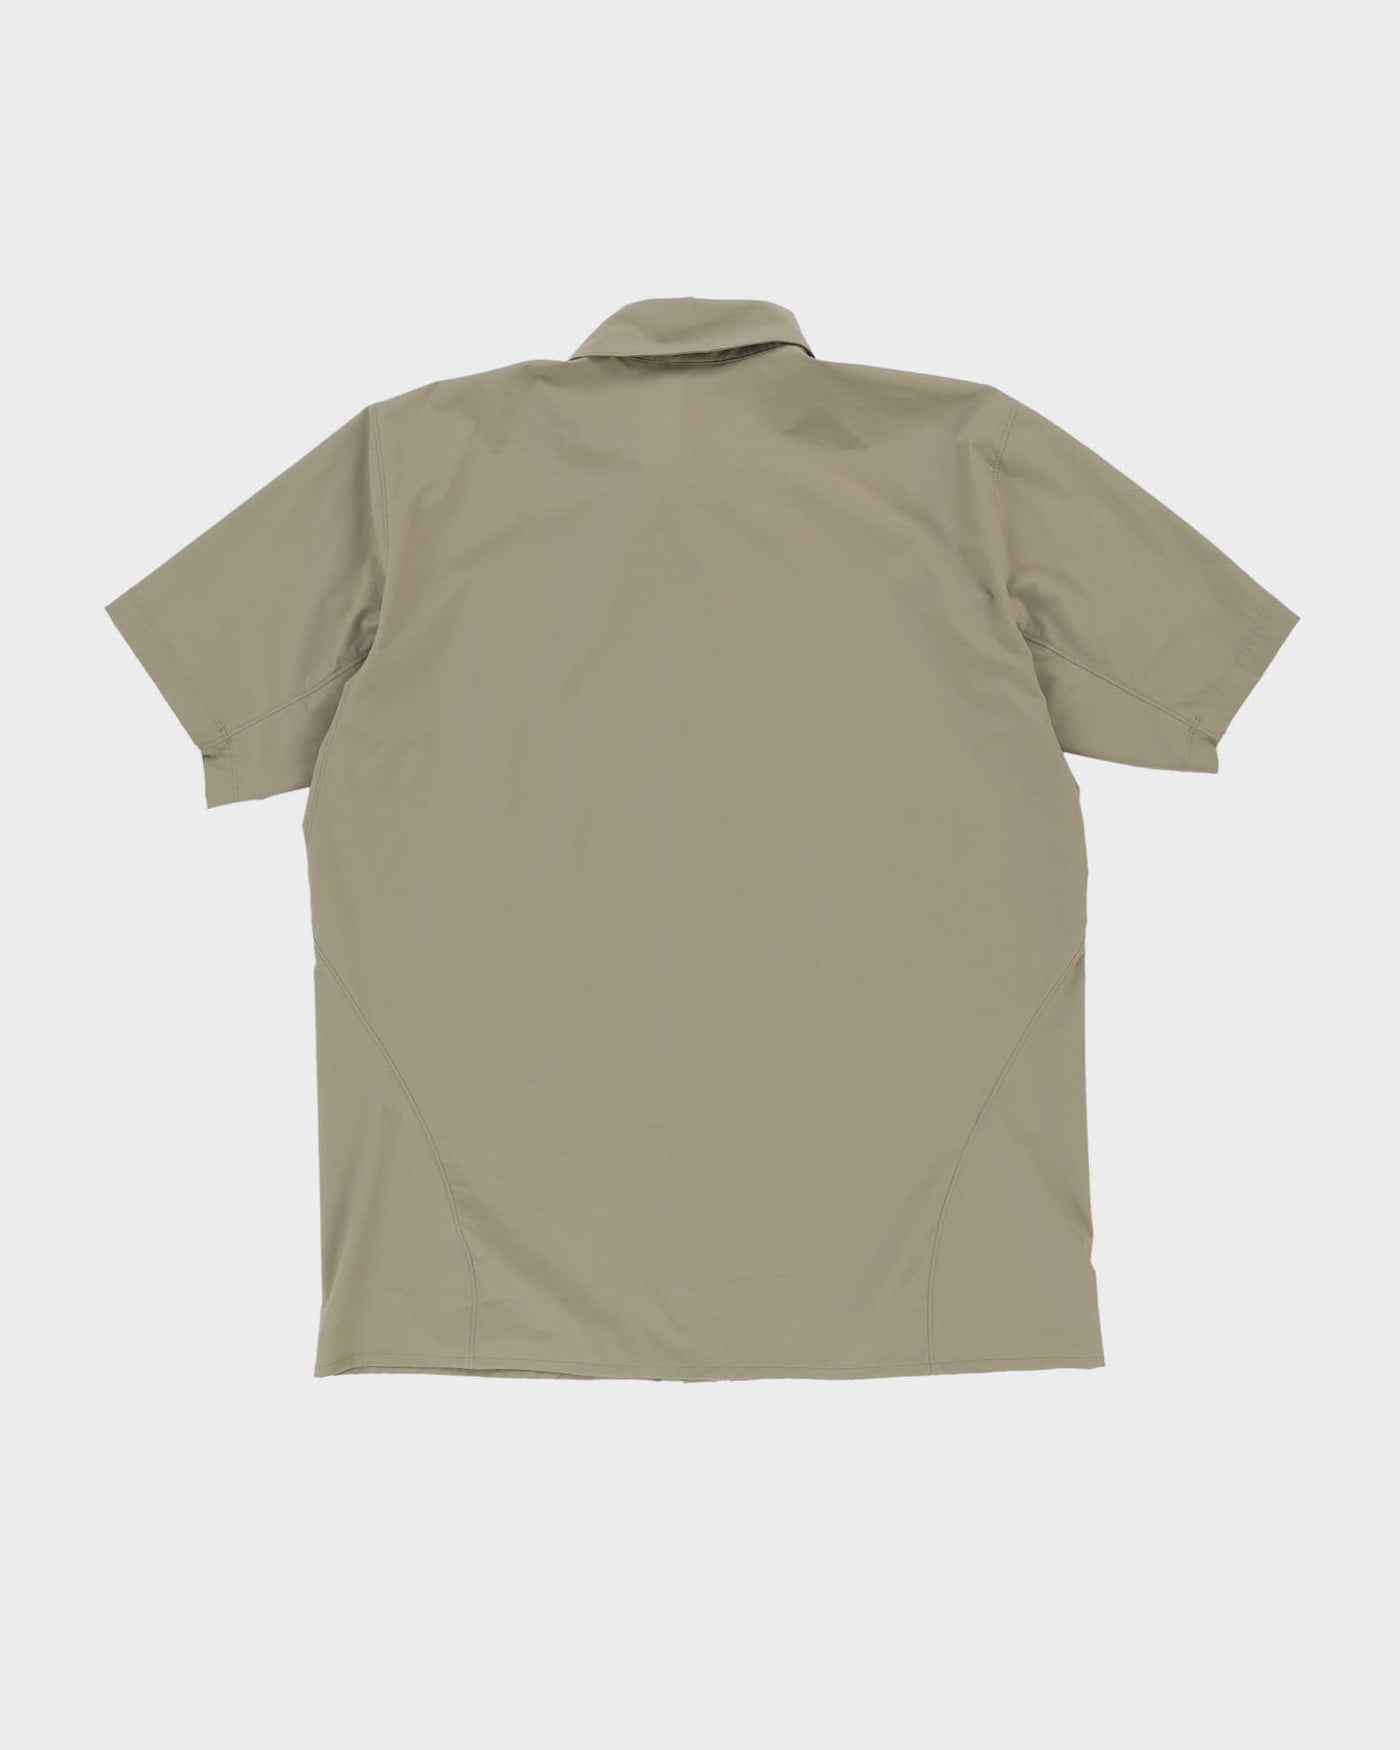 Arc'Teryx Grey Short-Sleeve Work Shirt - L